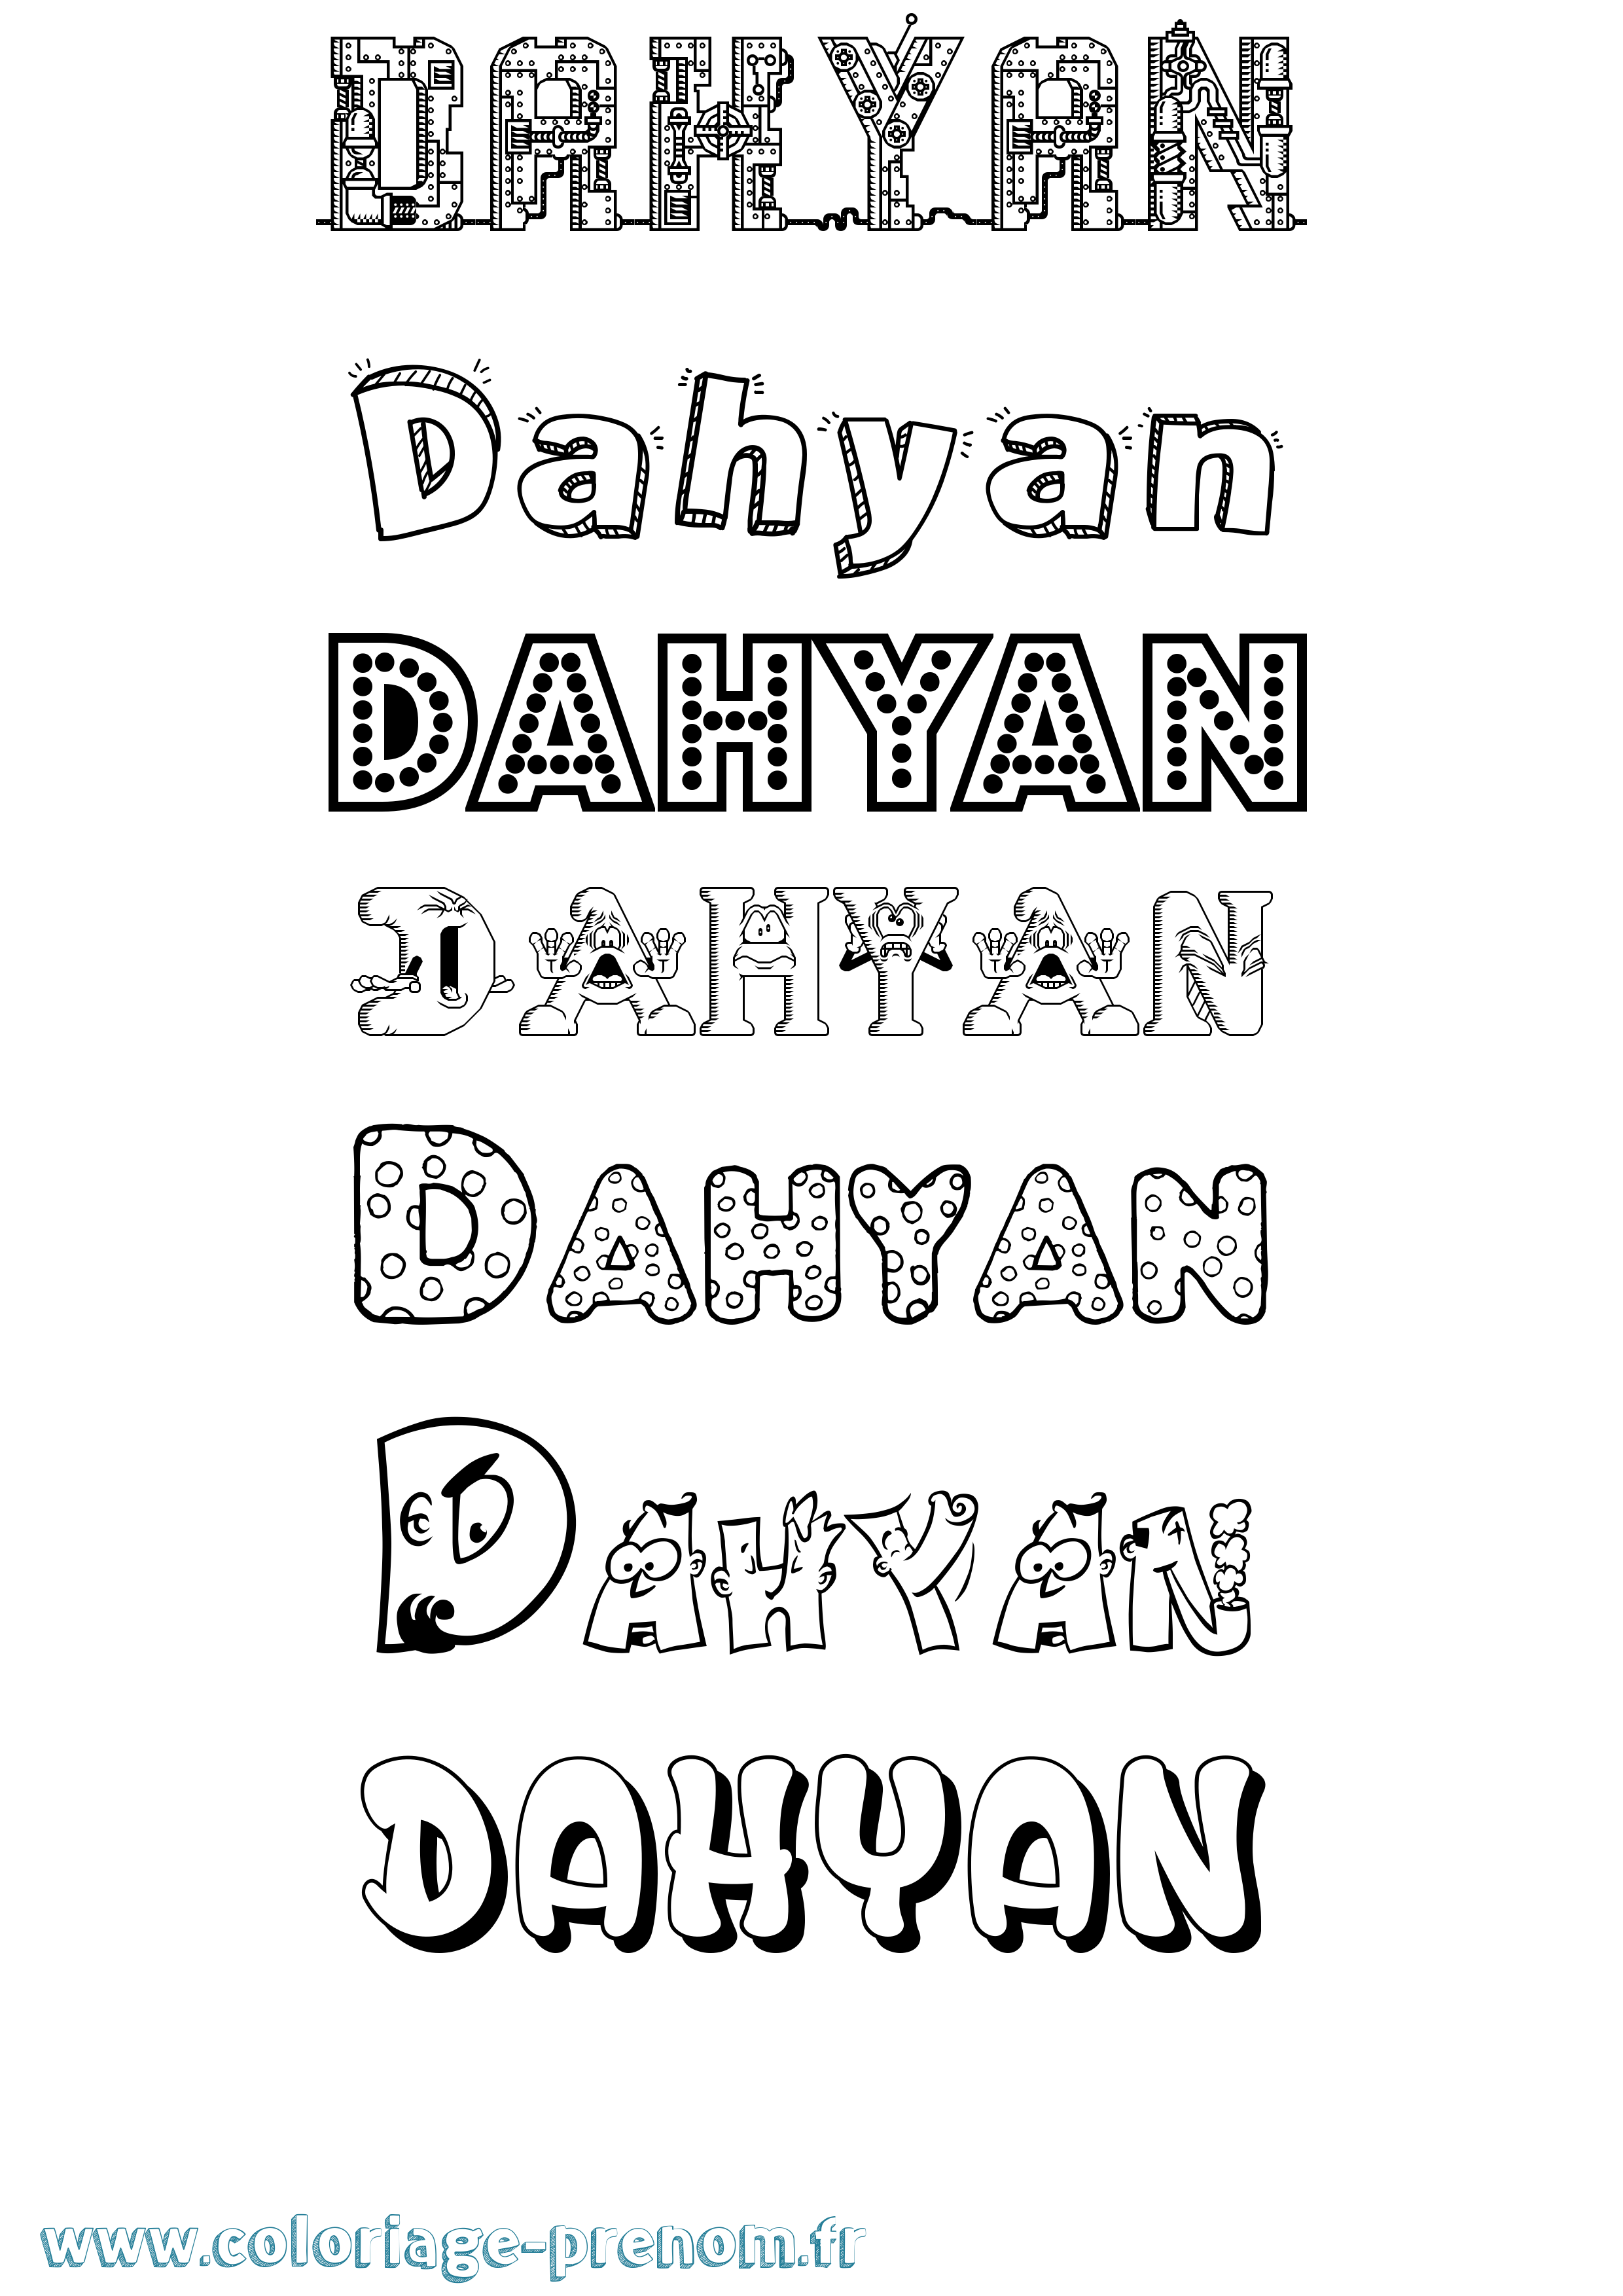 Coloriage prénom Dahyan Fun